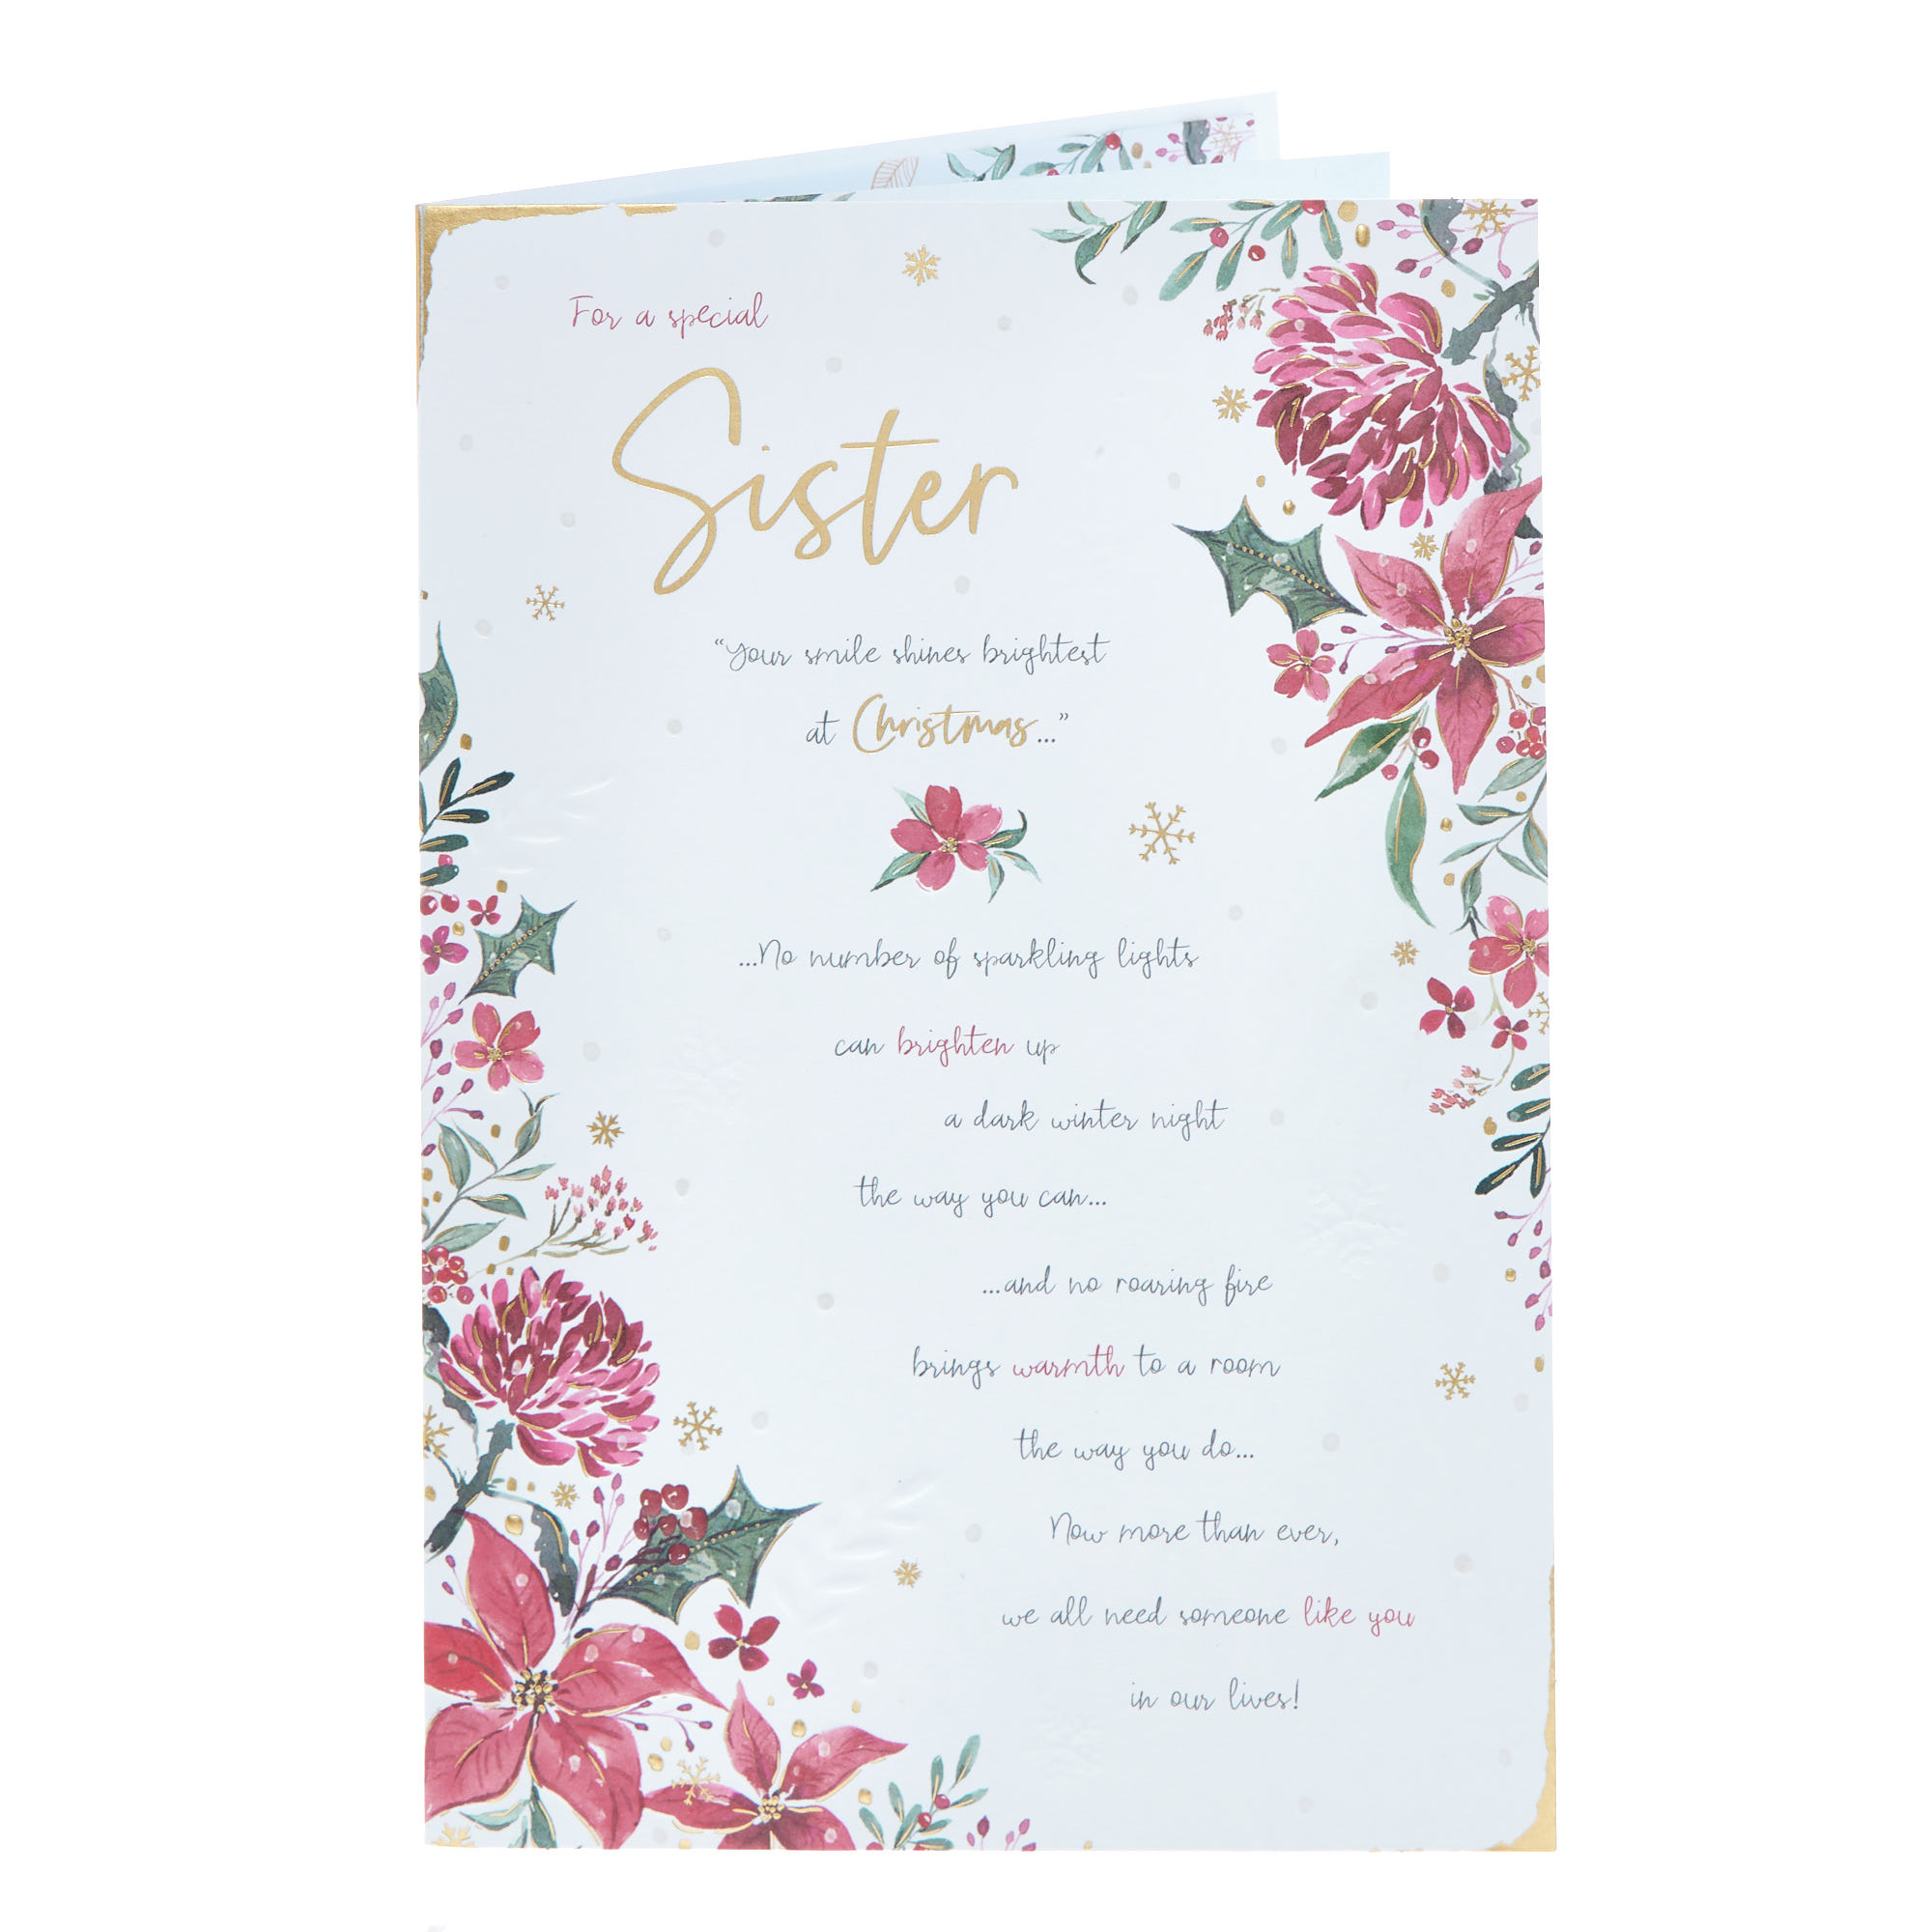 Sister Verse & Poinsettia Christmas Card